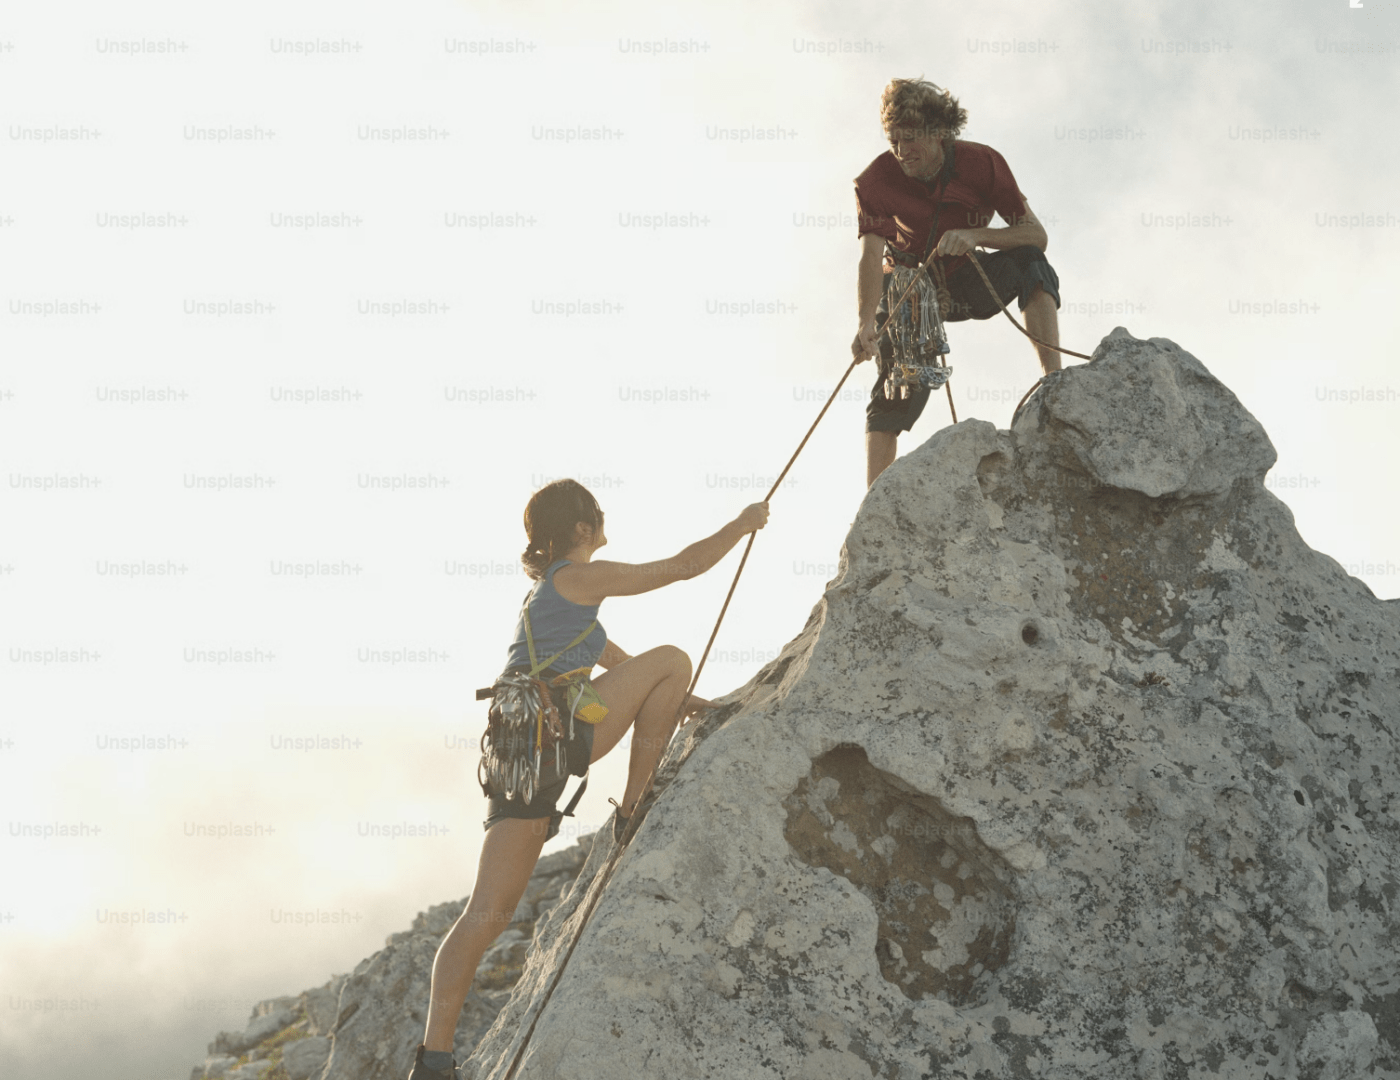 2 people rock climbing